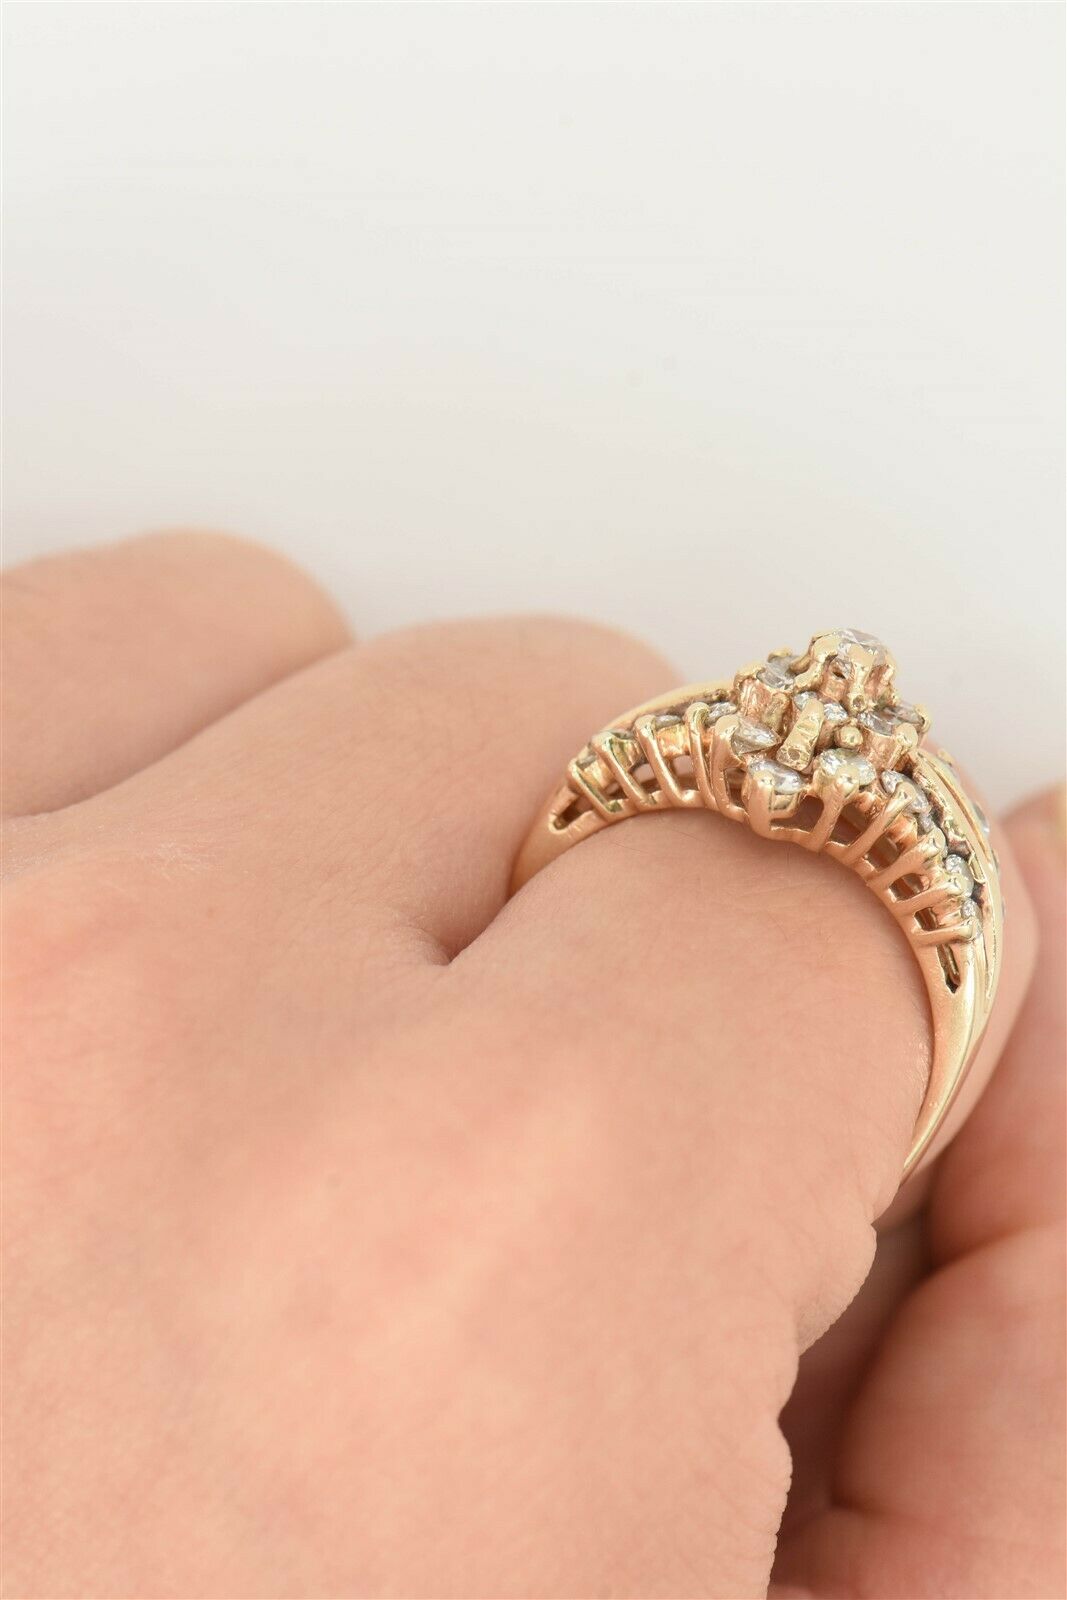 14K Gold Diamond Dice Ring 7.06g Diamond TCW 0.35ct Size 6 RG0231